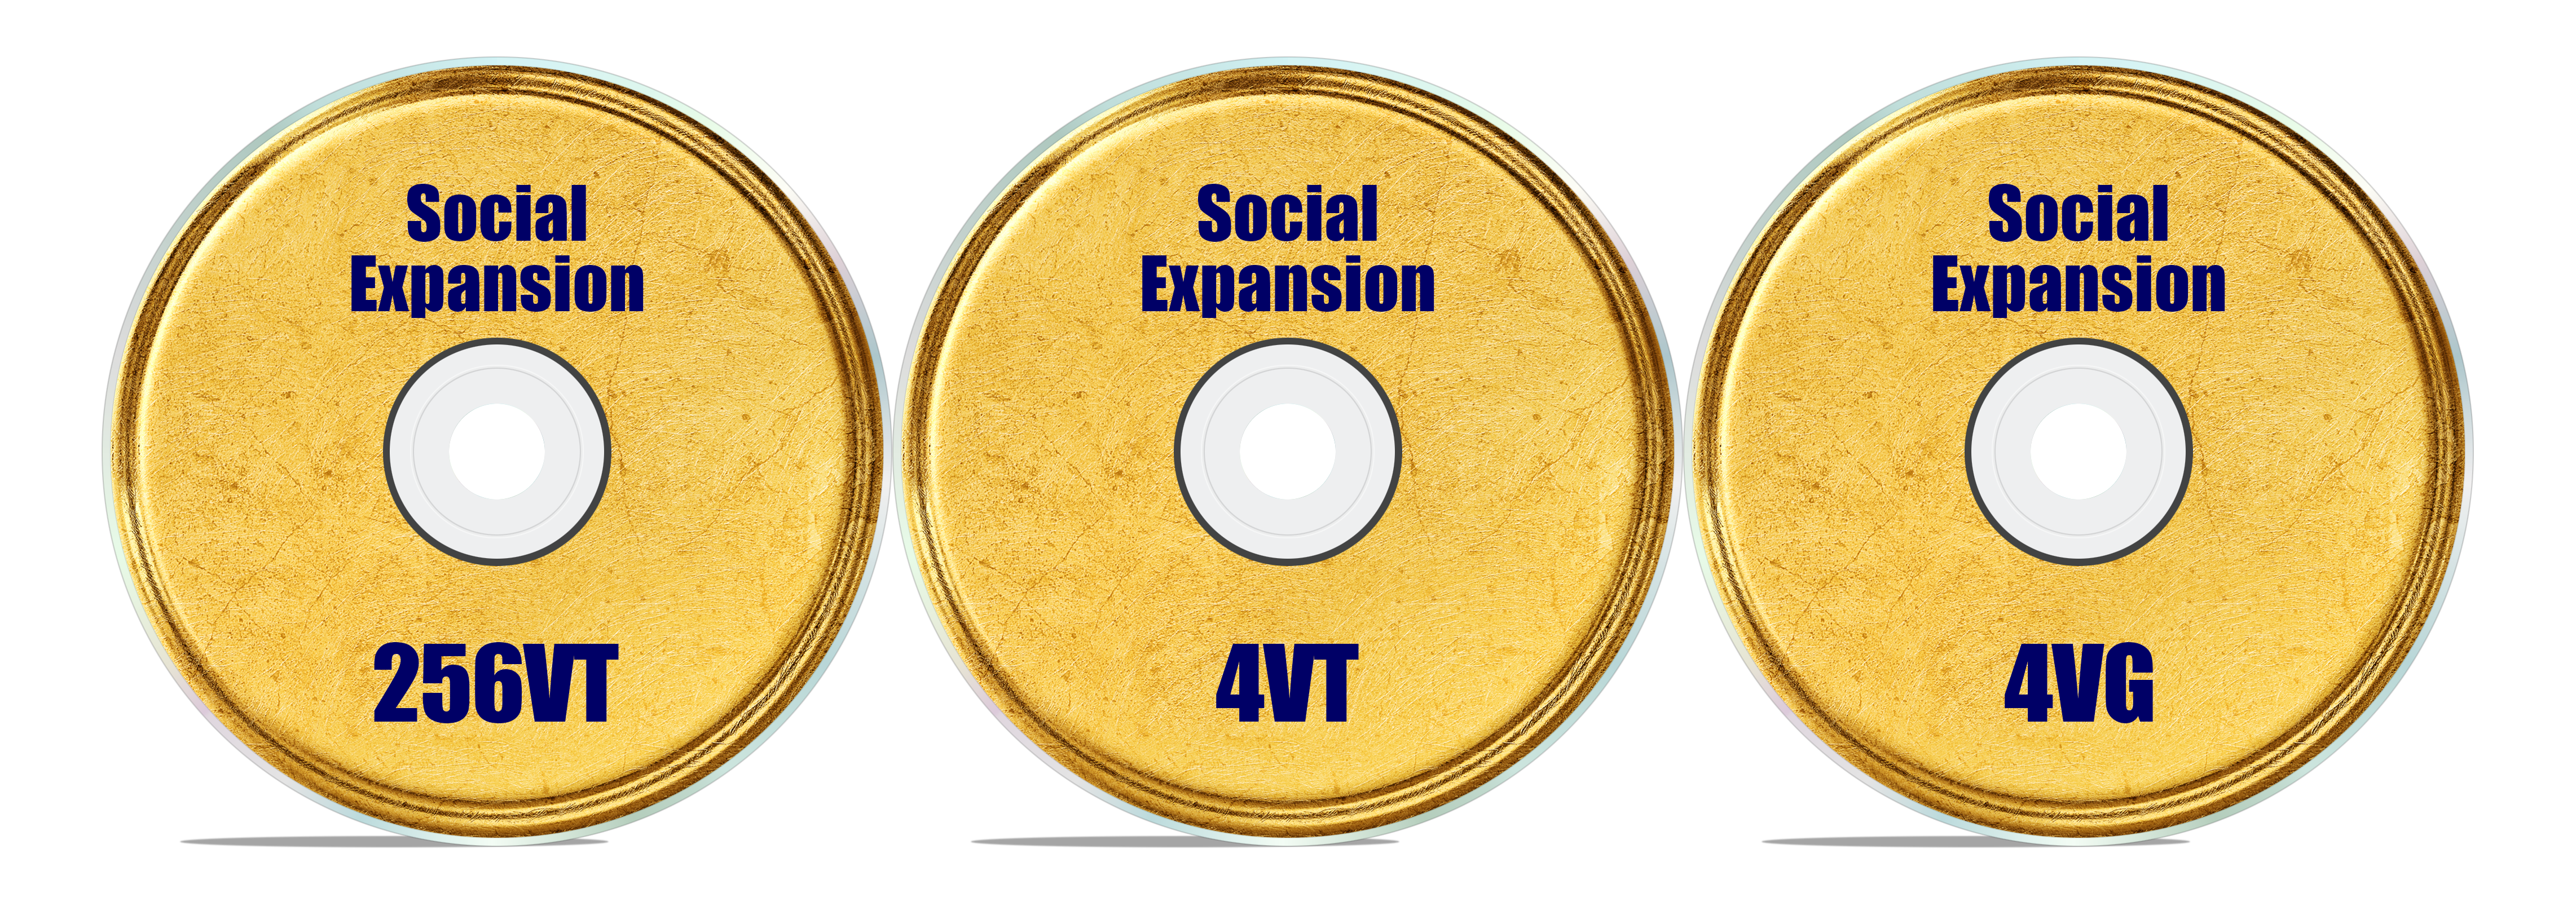 Social Expansion